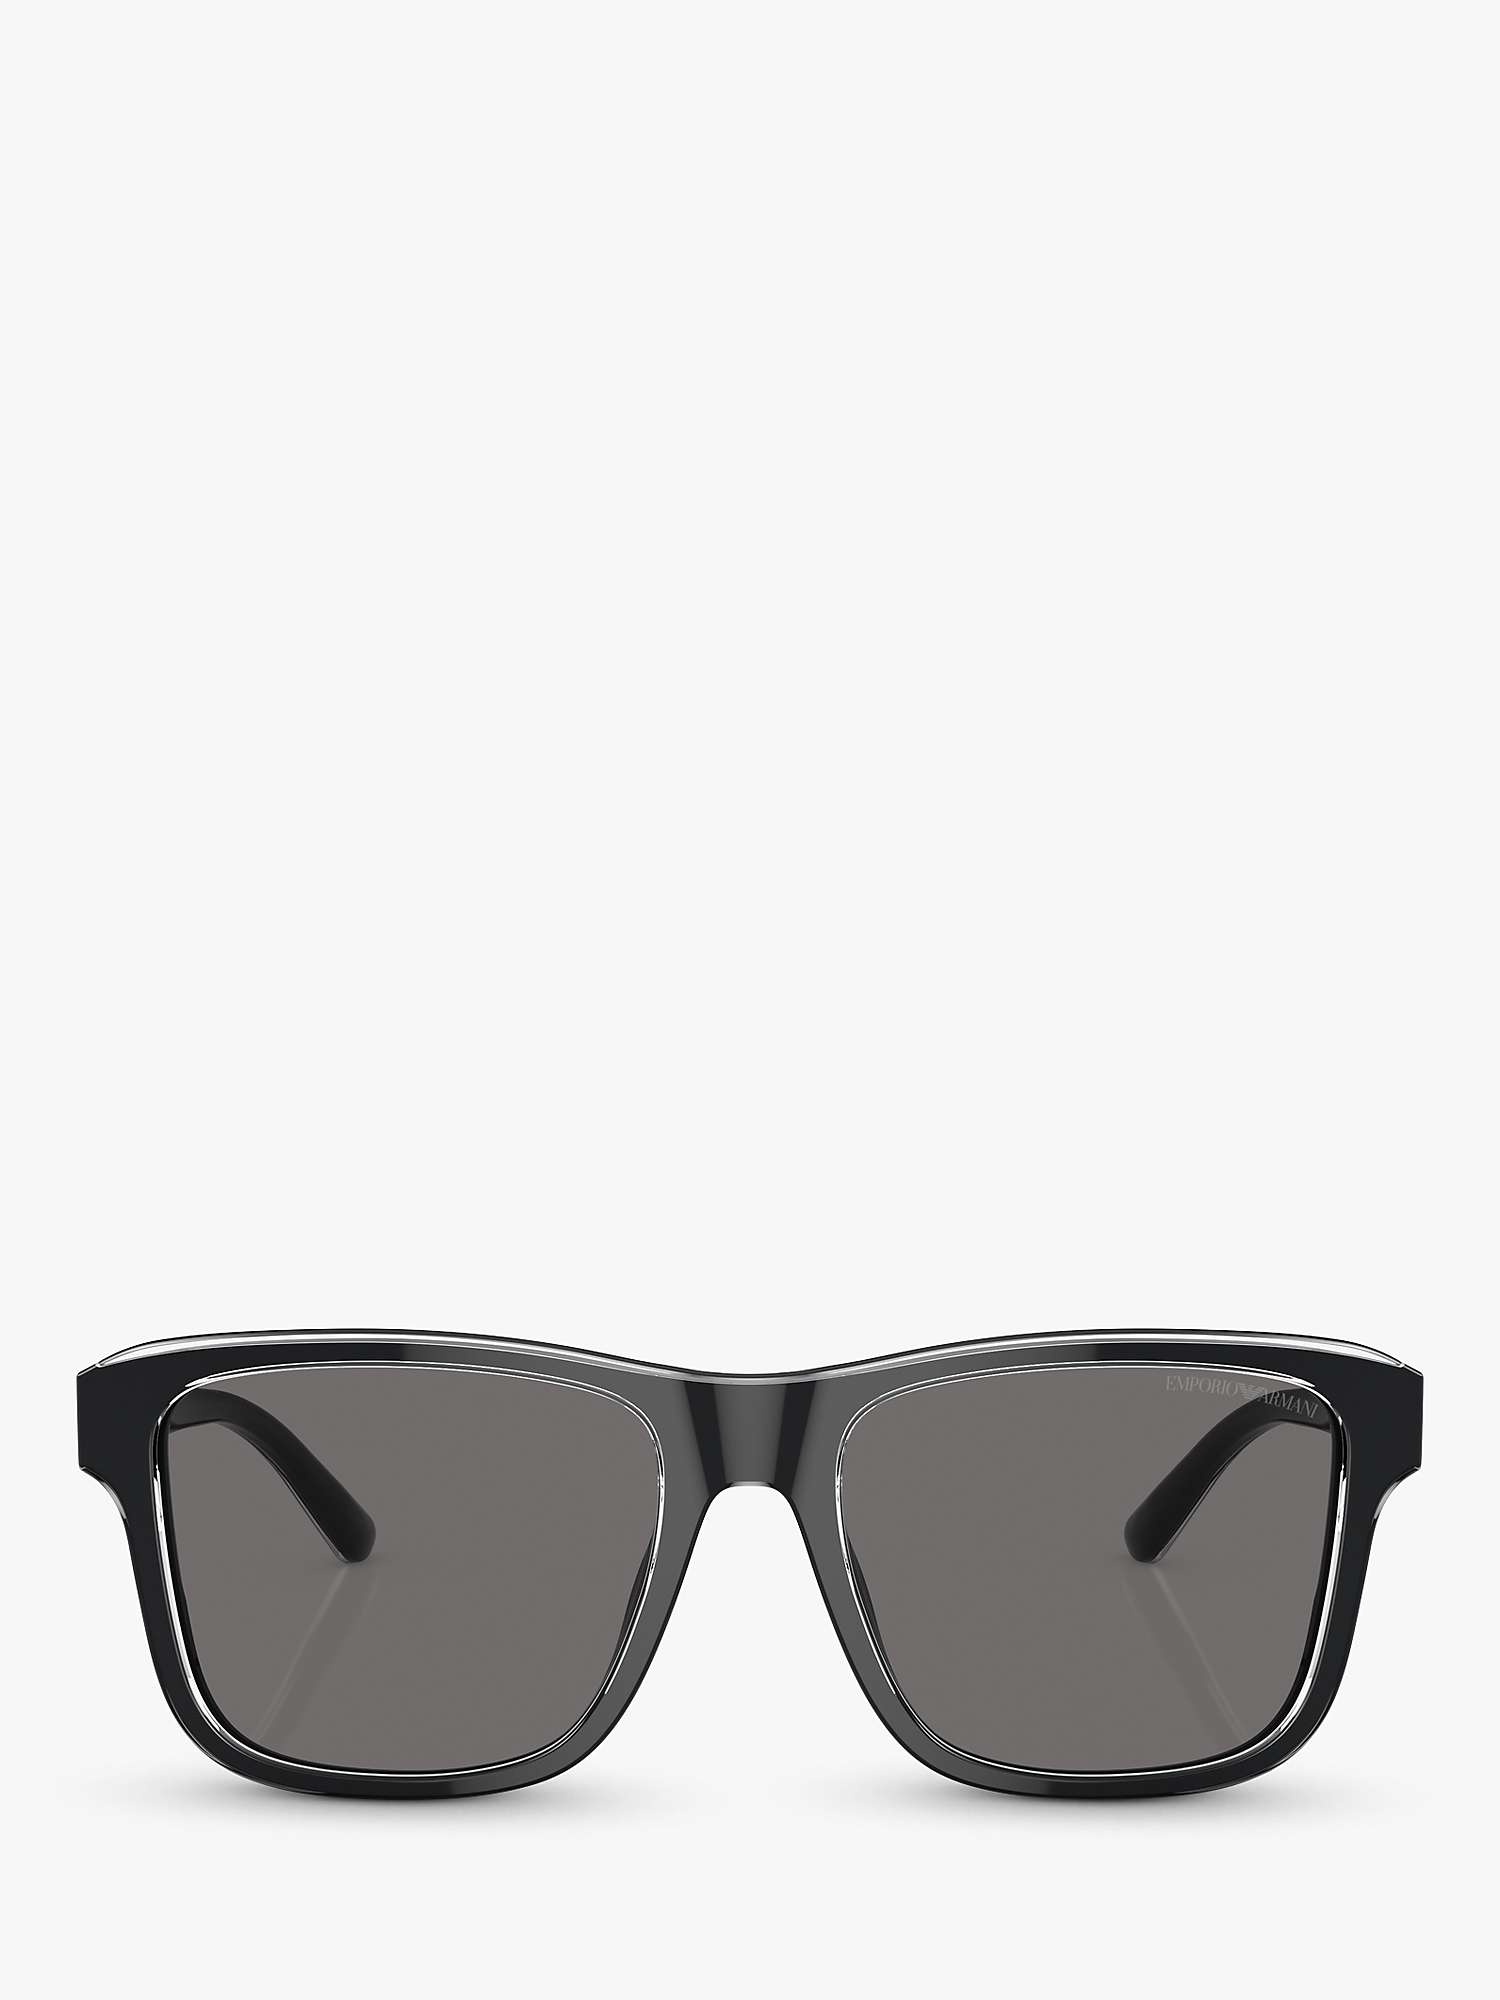 Buy Emporio Armani EA4208 Men's Polarised D-Frame Sunglasses, Shiny Black on Top Crystal/Grey Online at johnlewis.com